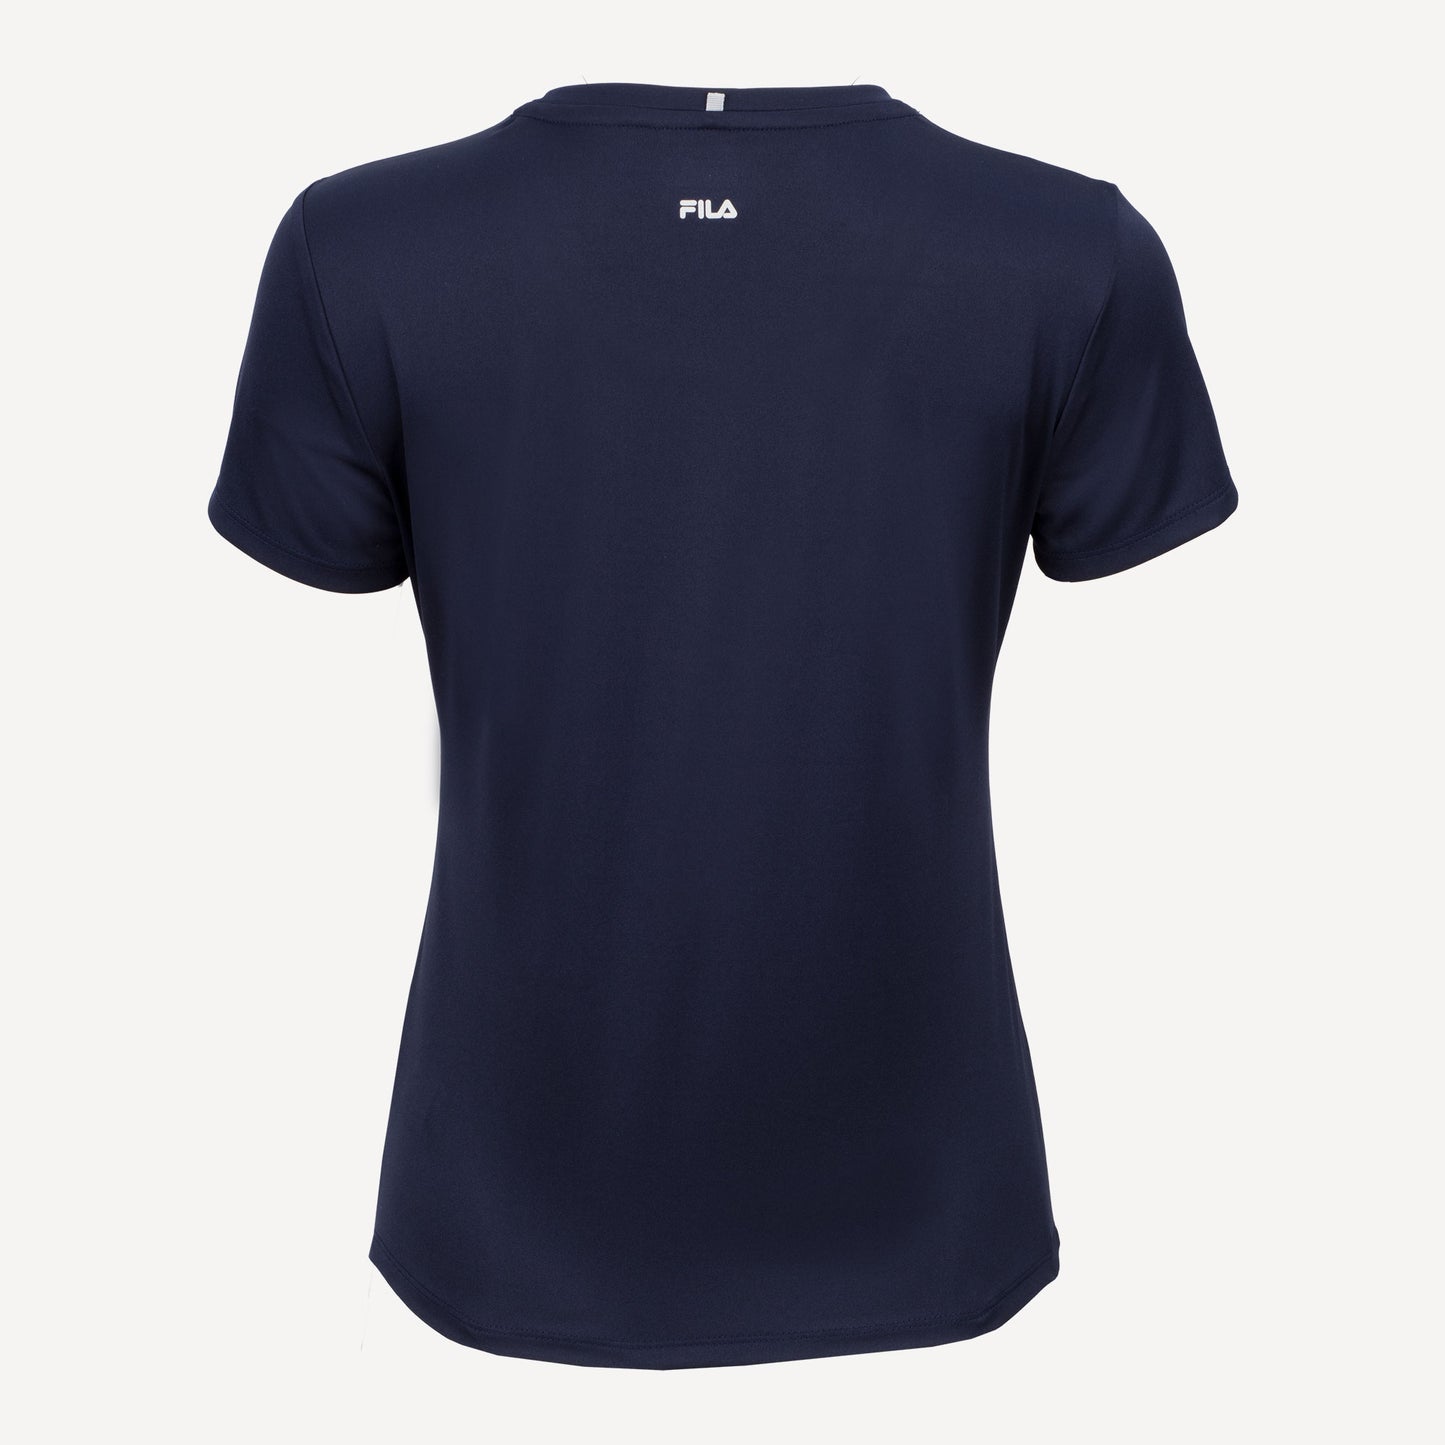 Fila Leonie Women's Tennis Shirt Blue (2)